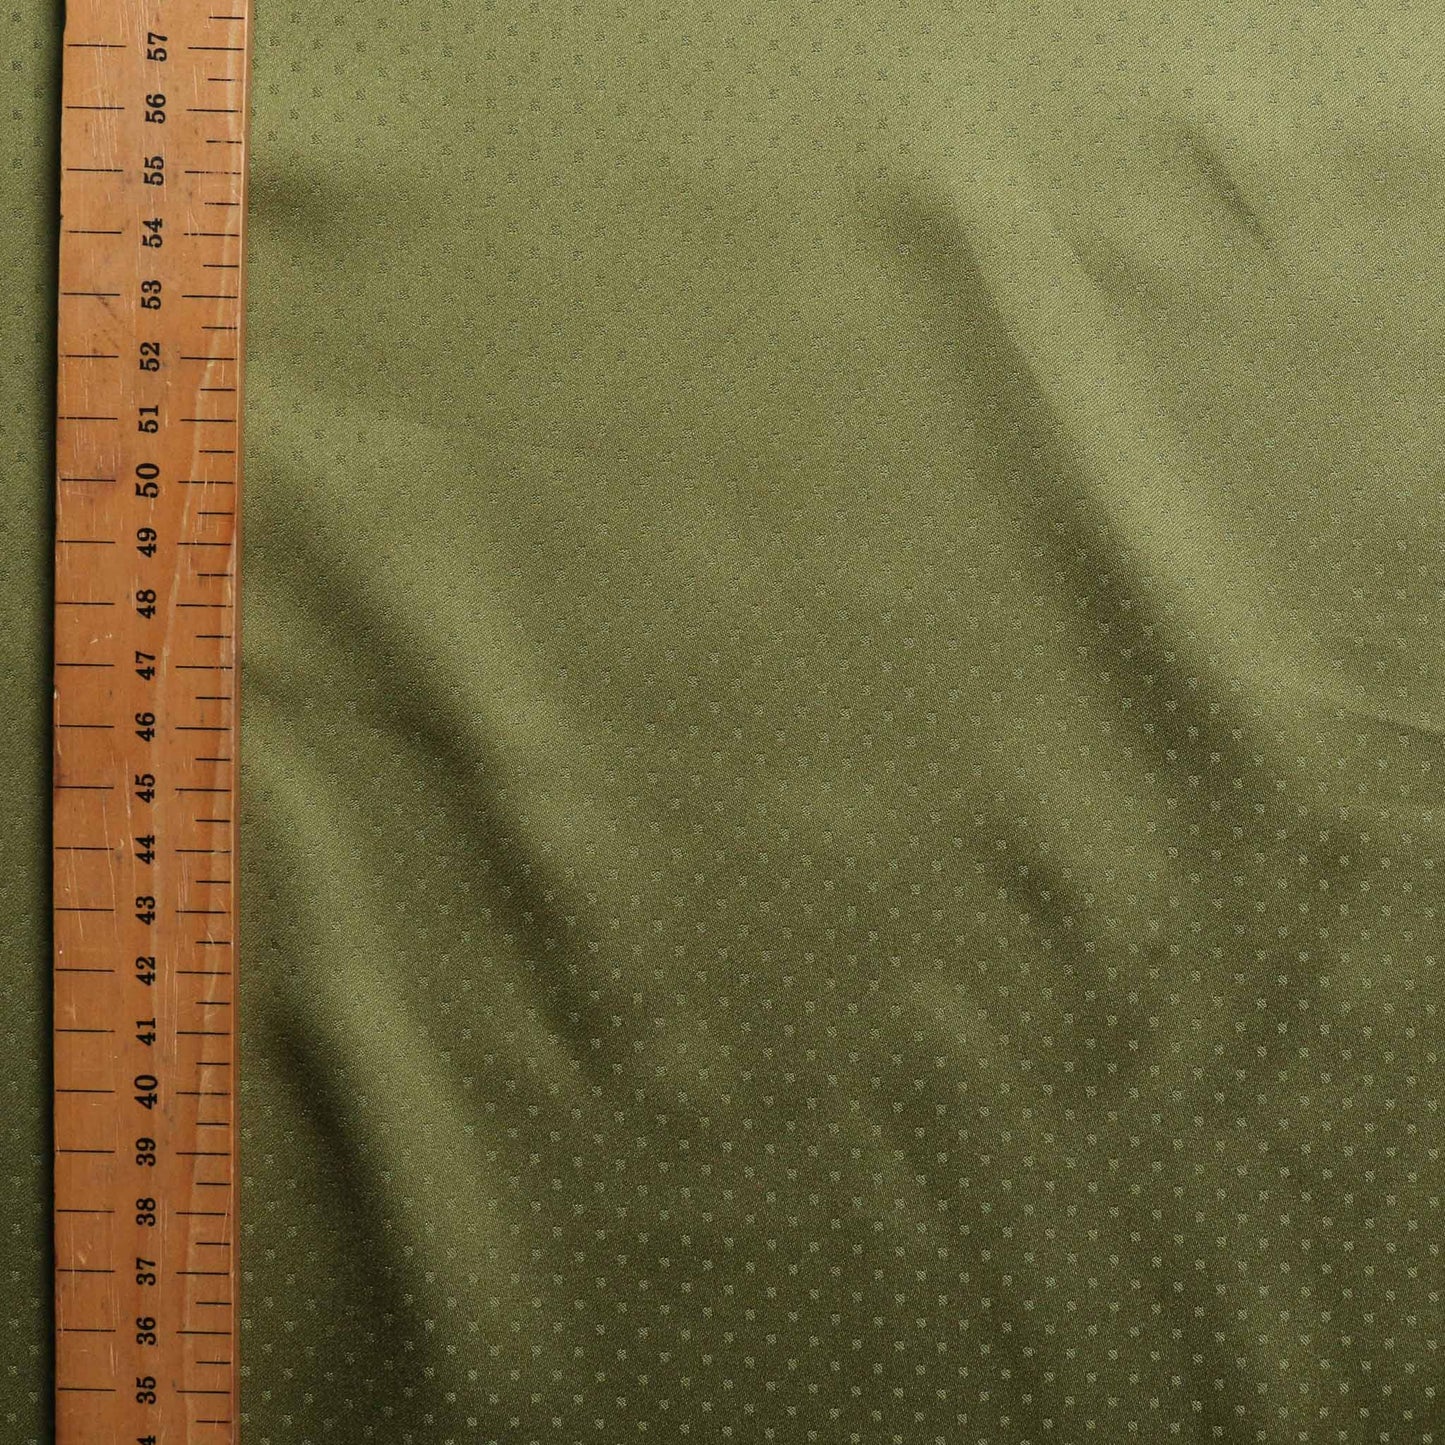 metre green shiny lining dressmaking fabric with jacquard dots design